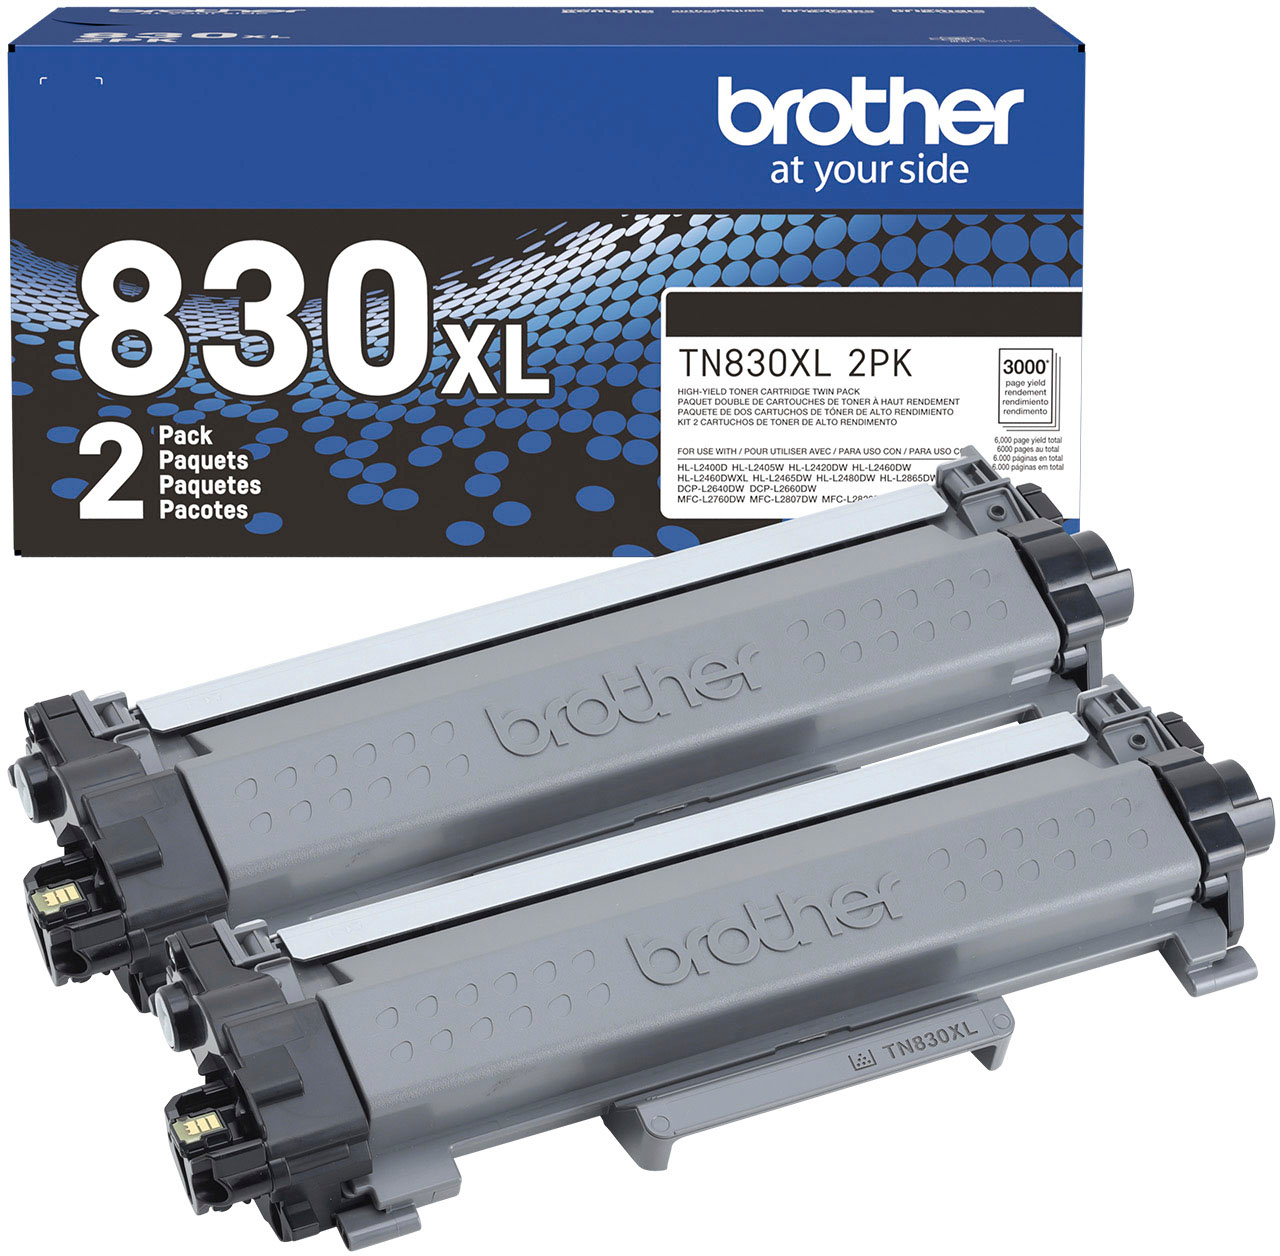 Brother Toner Cartridges - DCP Series